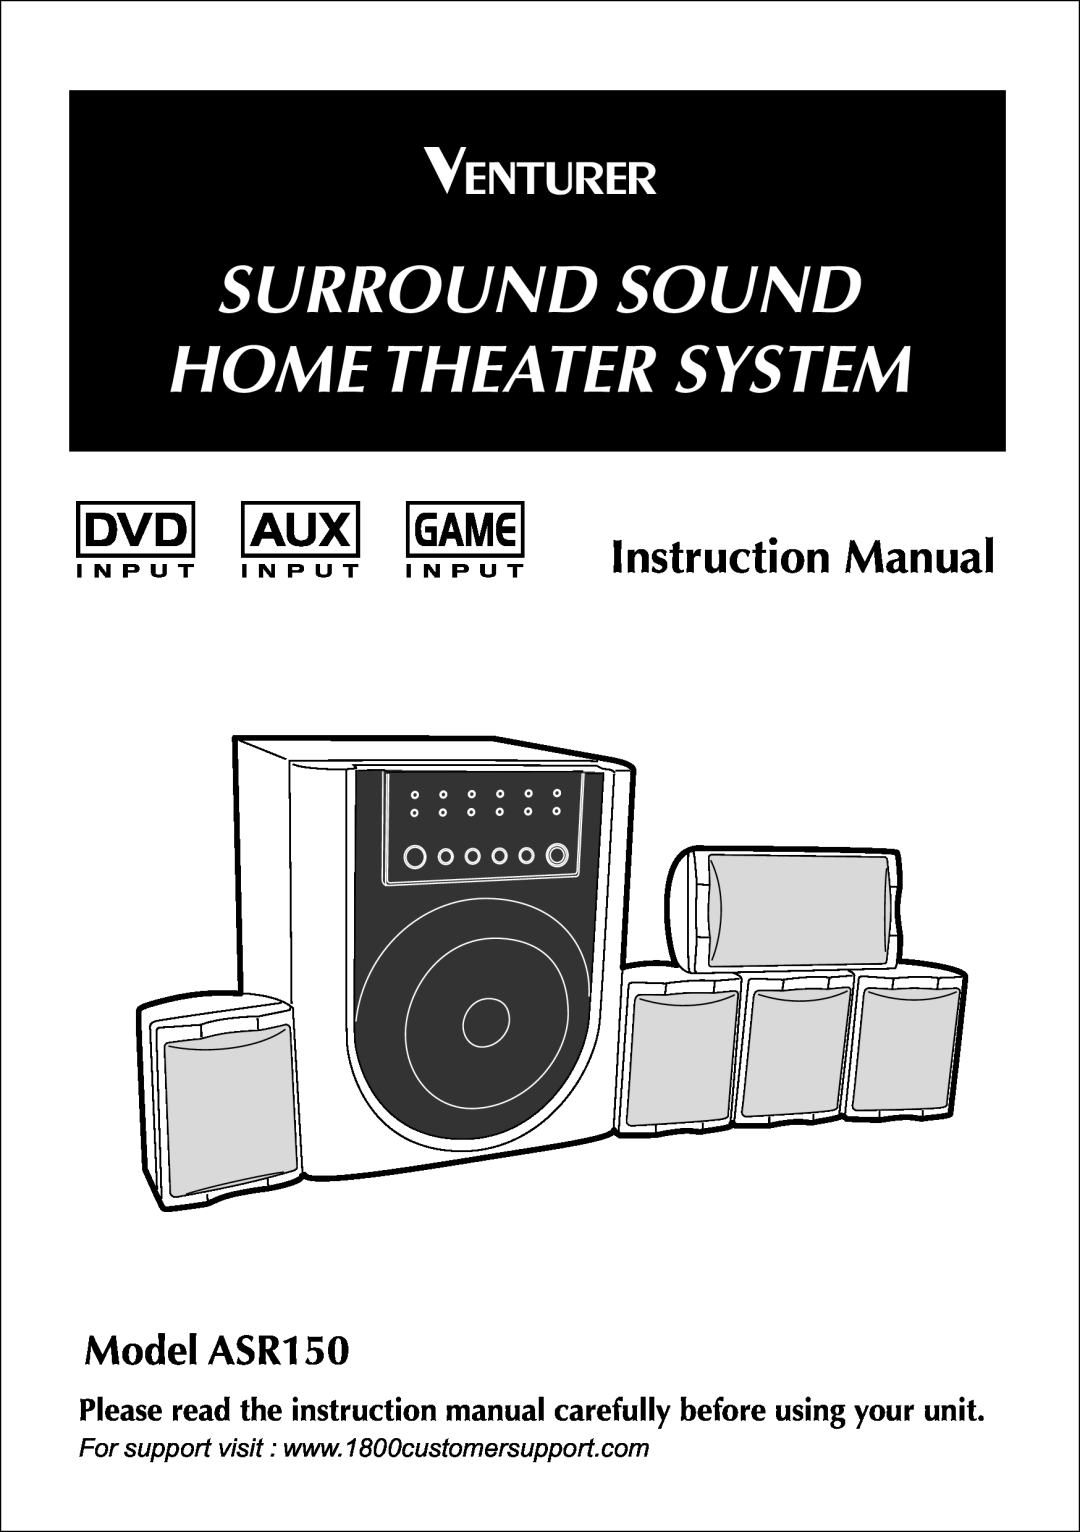 Venturer instruction manual Surround Sound Home Theater System, Model ASR150 